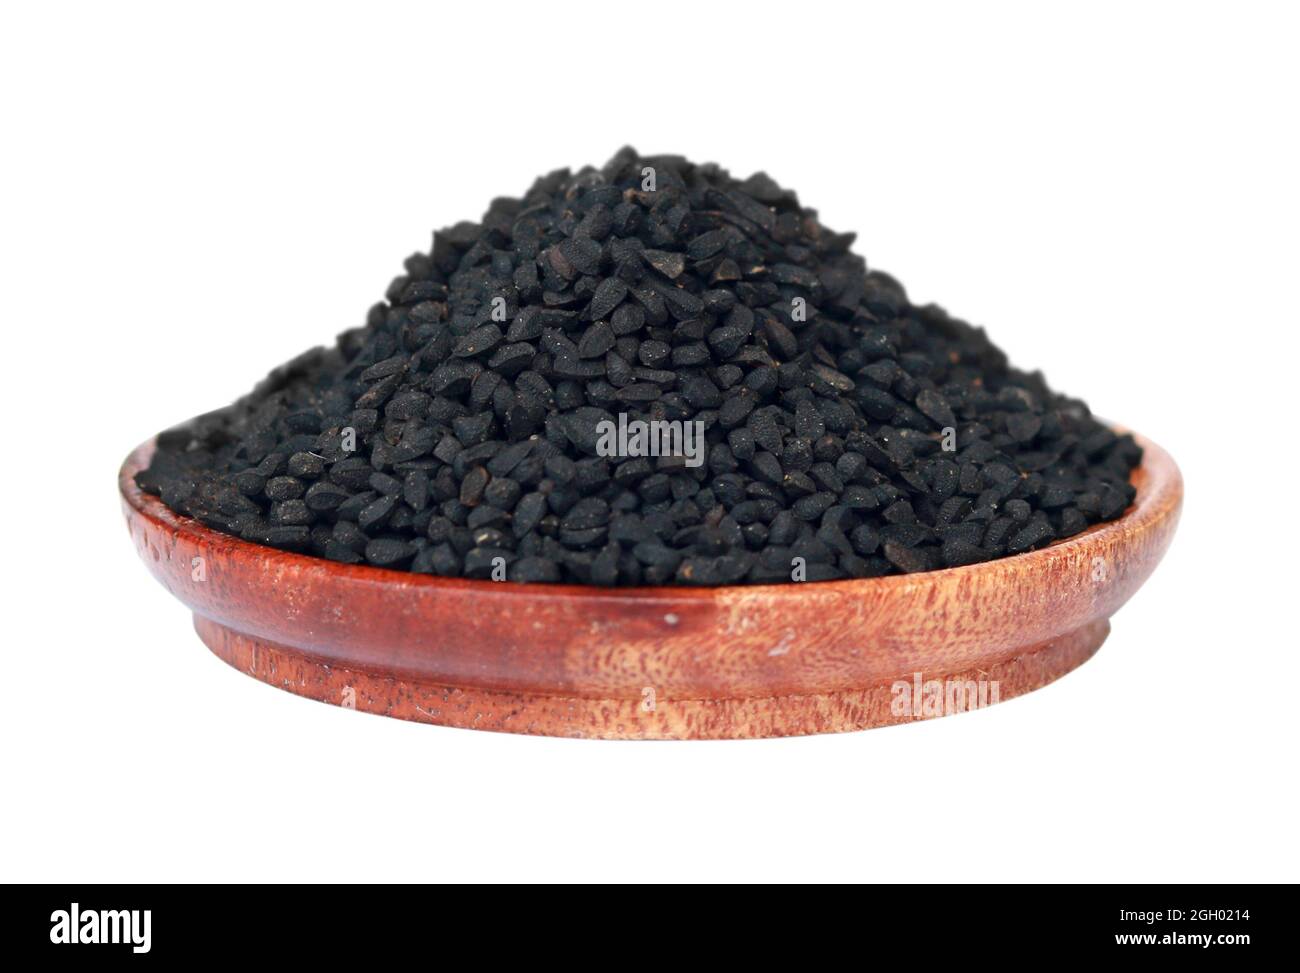 Black cumin seeds on white background Stock Photo